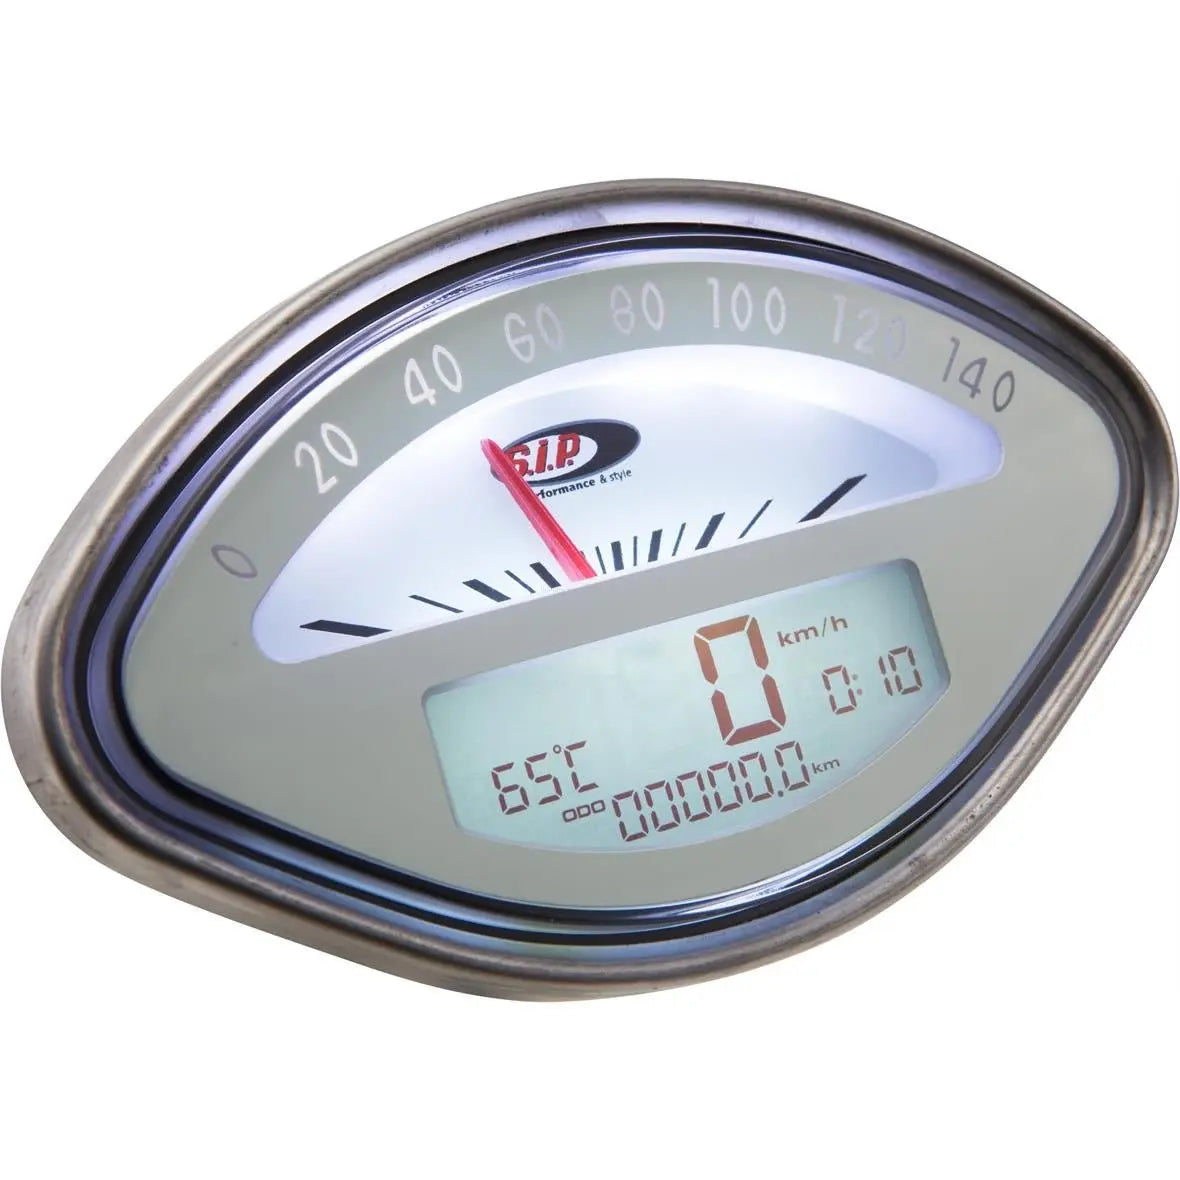 Speedometer/Rev Counter SIP 2.0 | Vespa Models SIP 154.89 Falan Parts